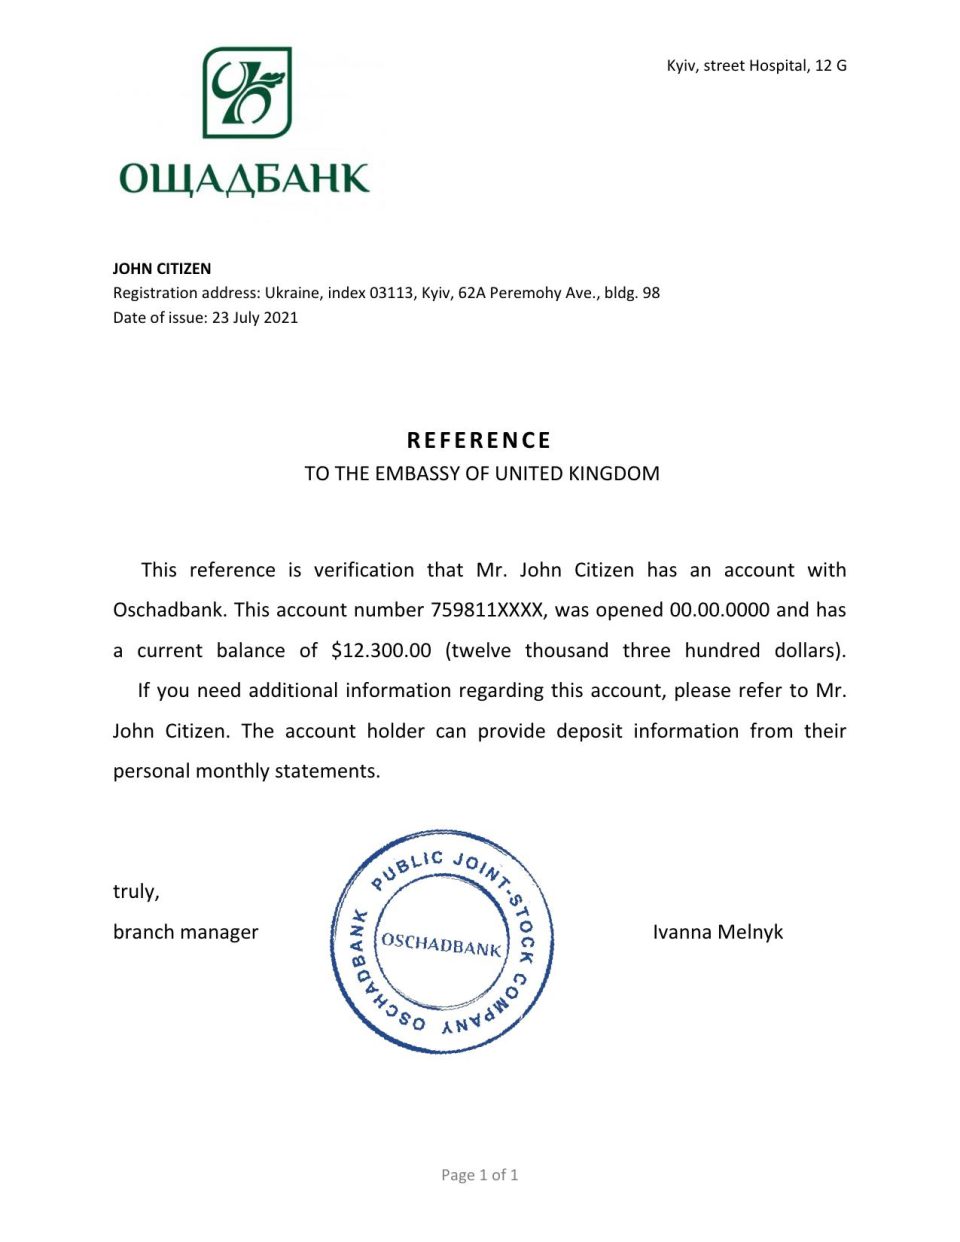 Download Ukraine Oschadbank Bank Reference Letter Templates | Editable Word